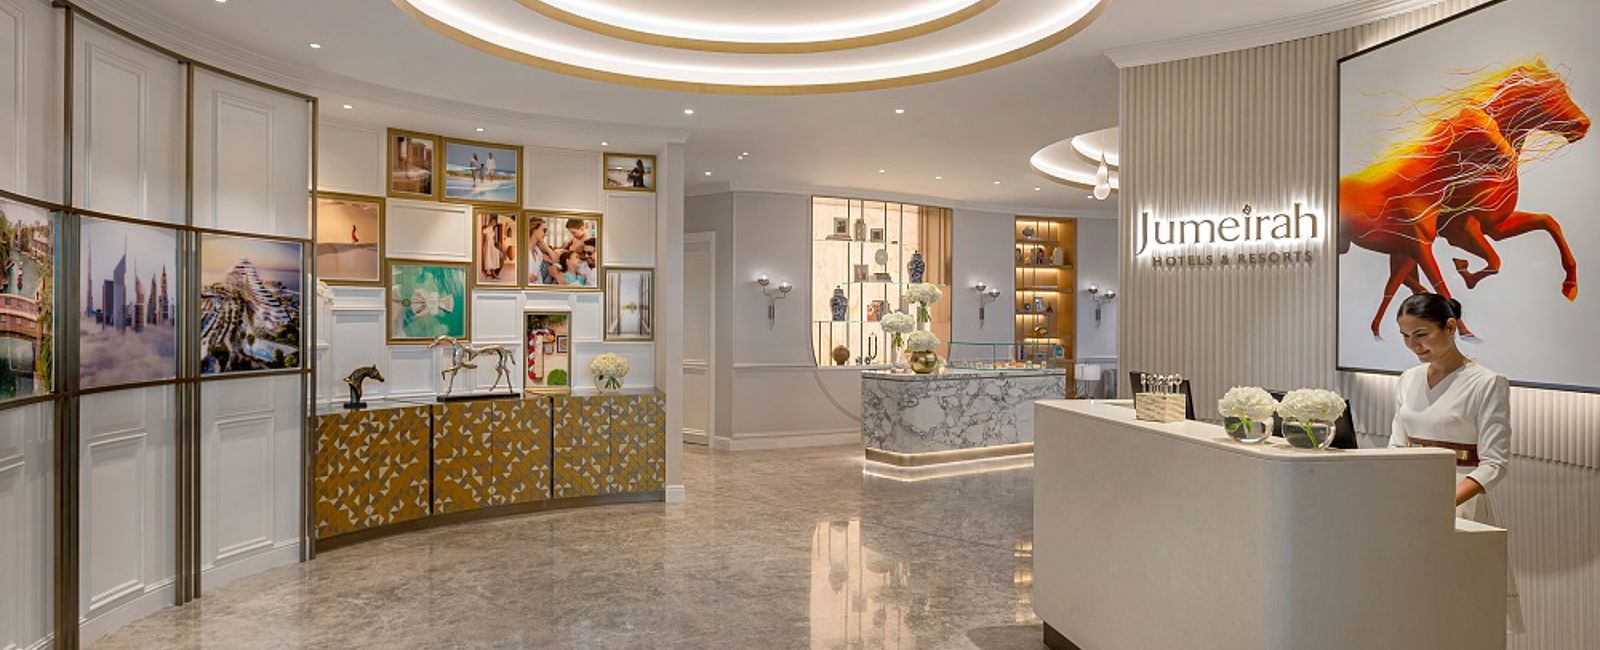 HOTELERÖFFNUNG NEWS
 Brandneu: Jumeirah Airport Lounge in Dubai 
